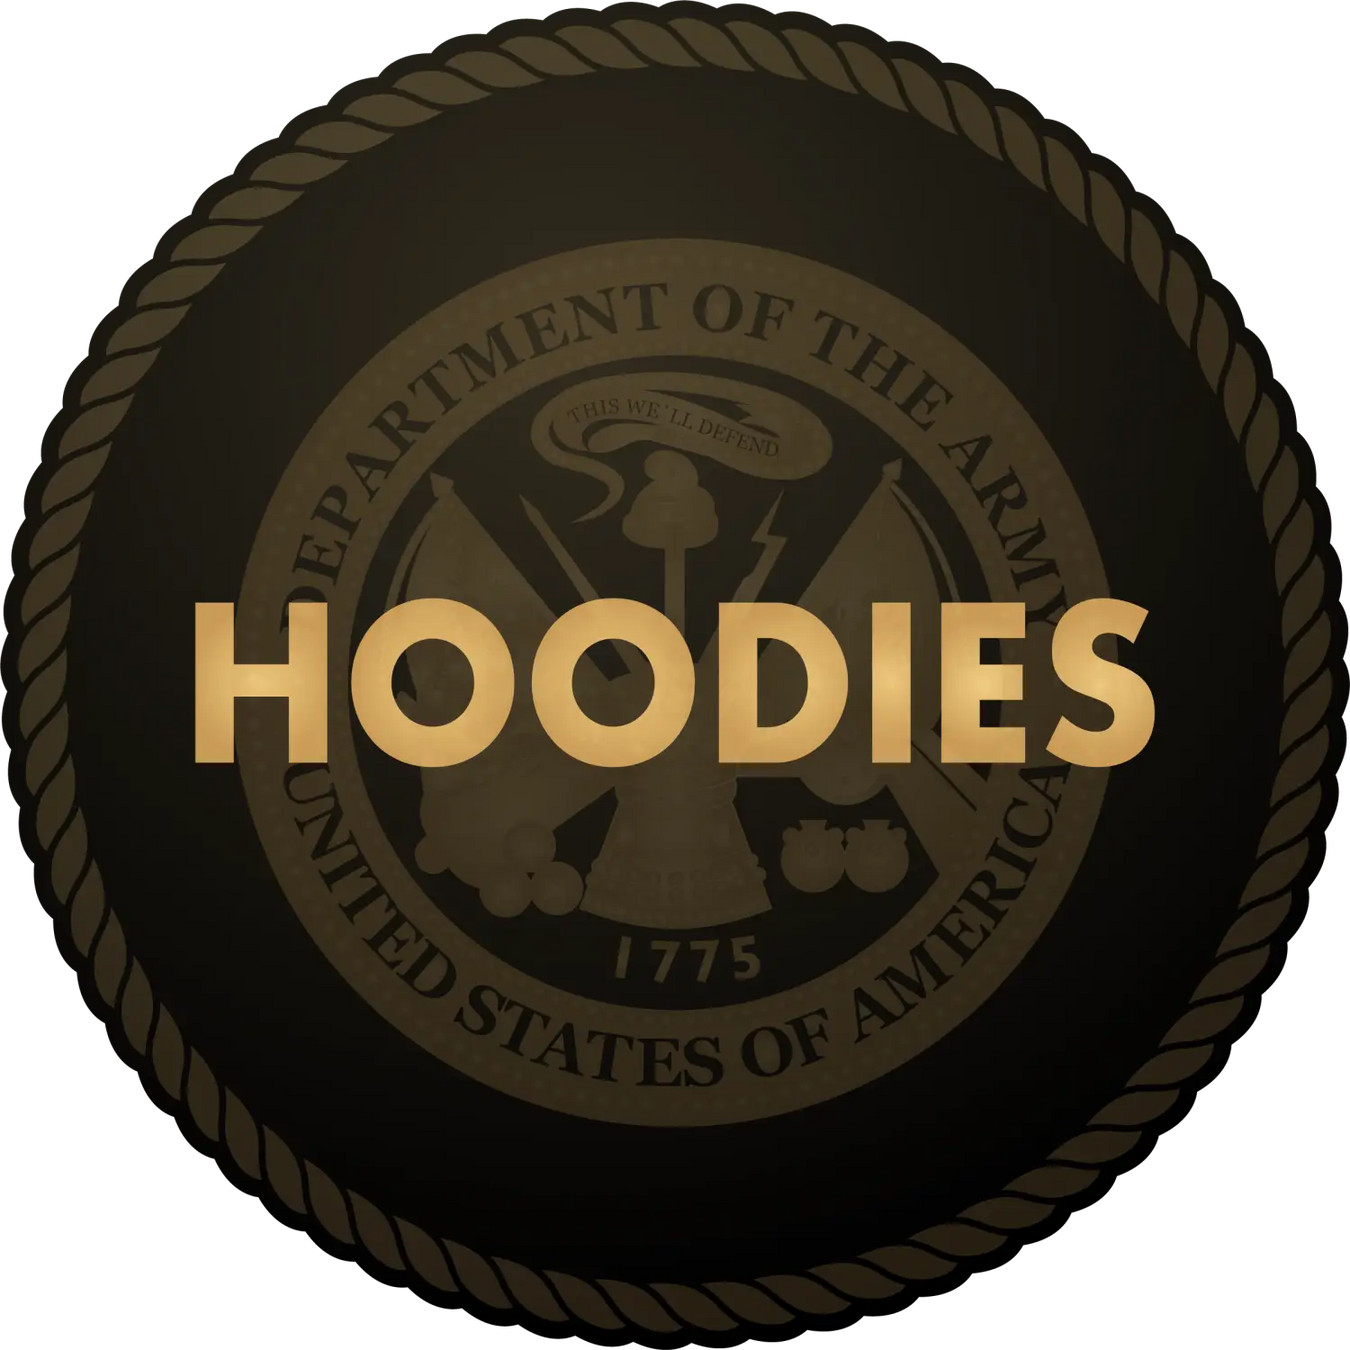 U.S. Army Hoodies